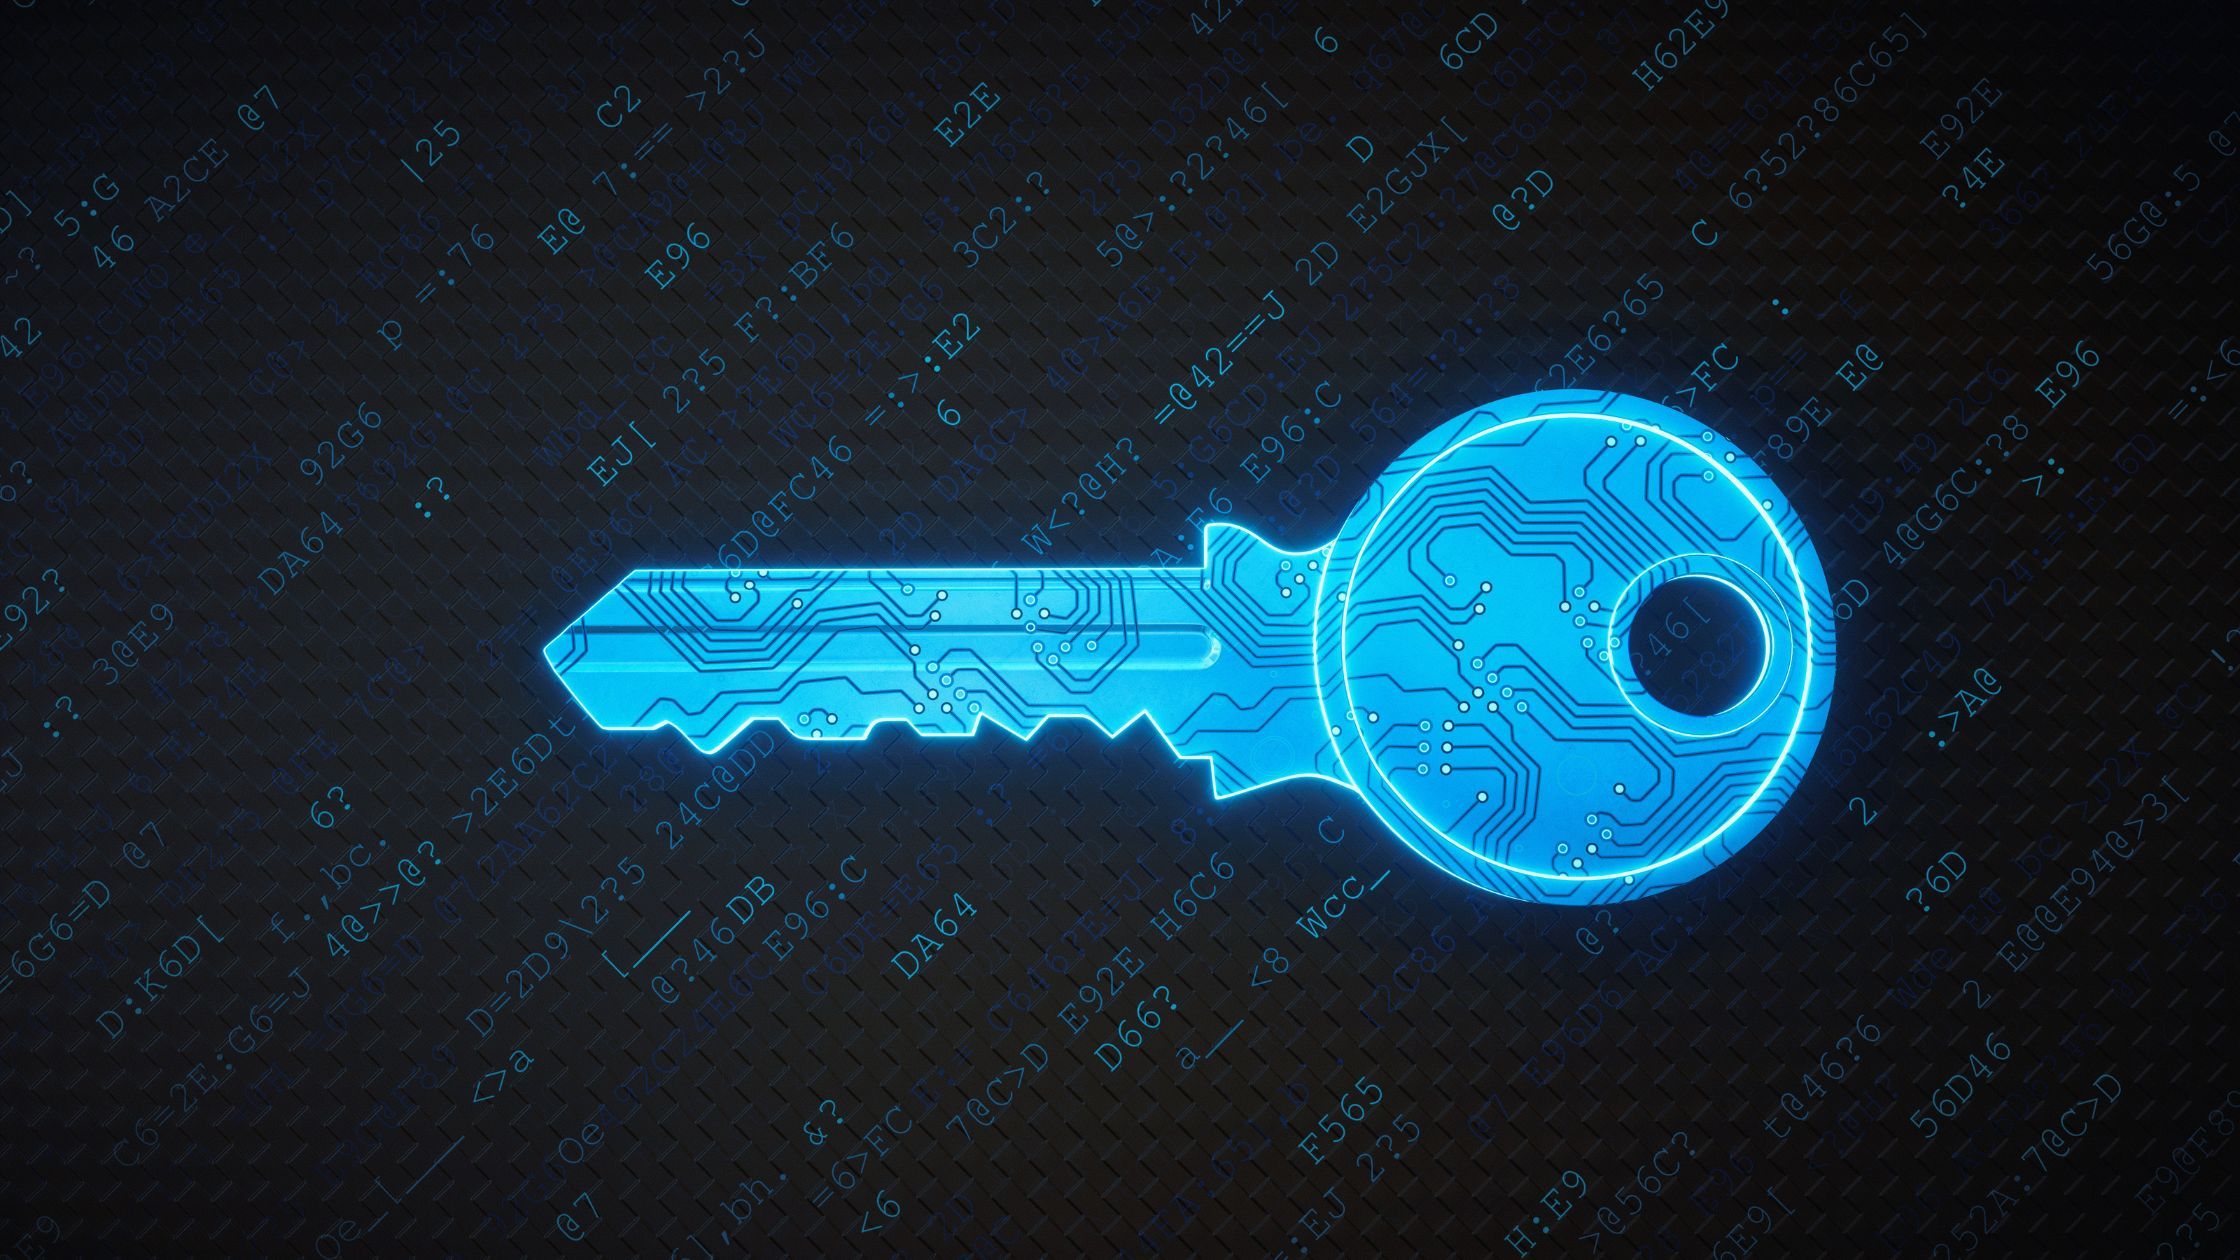 Encrypted data